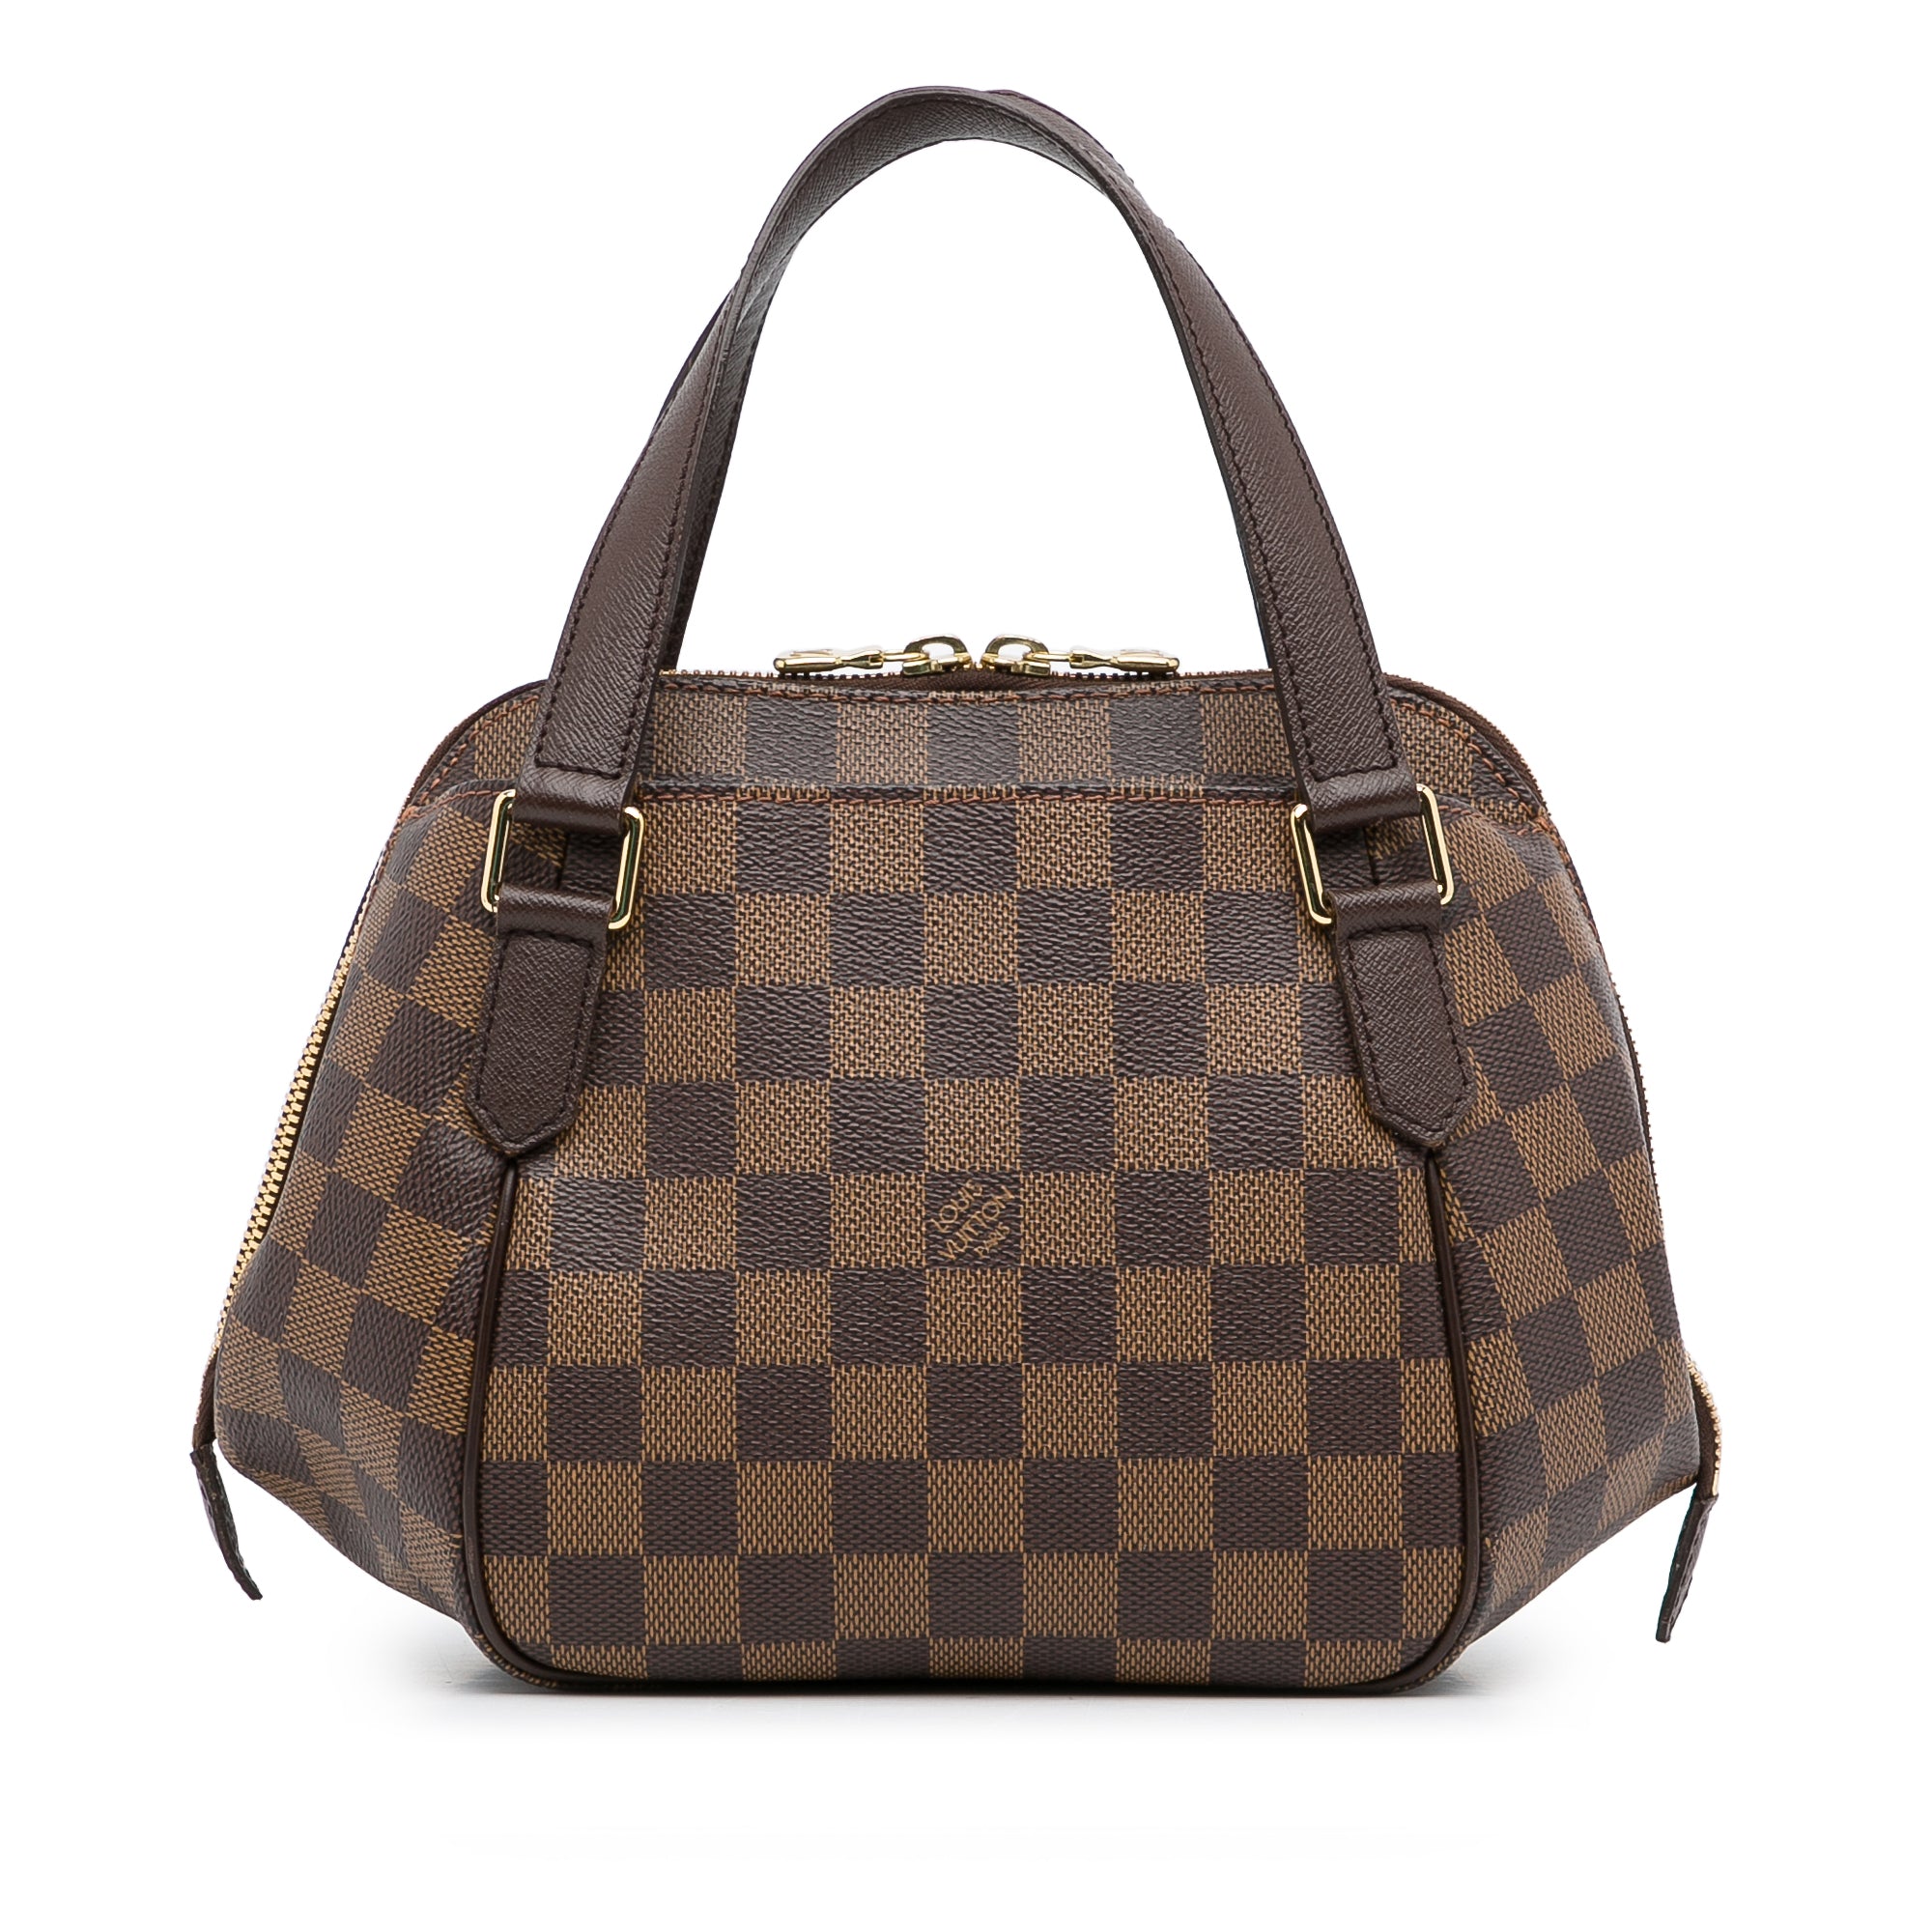 Louis Vuitton - Authenticated Phenix Handbag - Cloth Brown Plain for Women, Very Good Condition